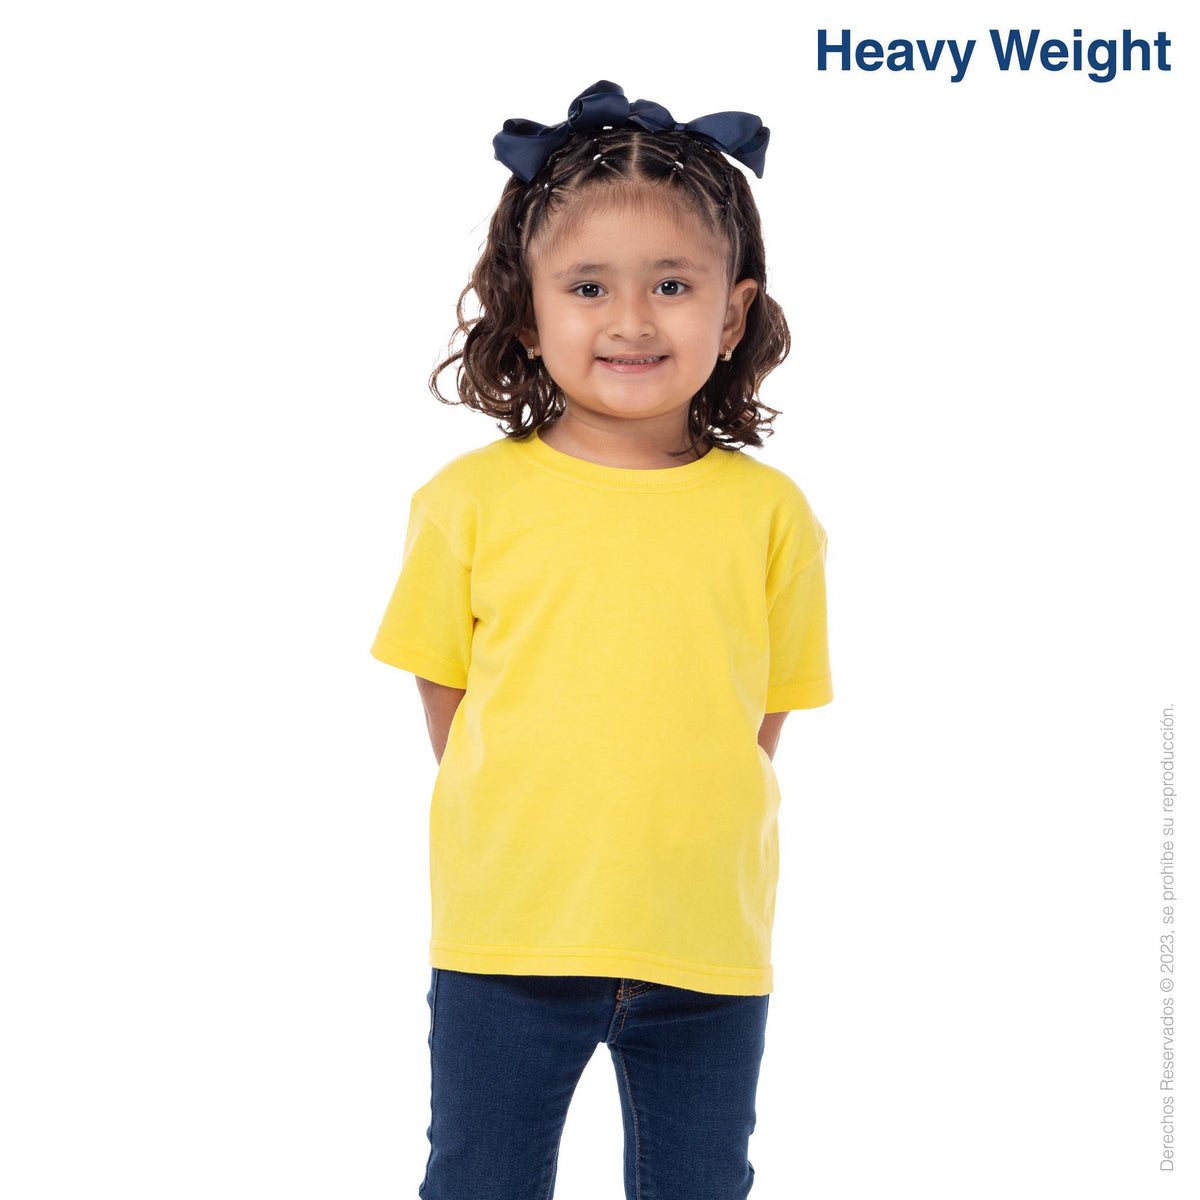 Toddler's Unisex Heavy Weight Crew Neck Short Sleeve T-Shirt 